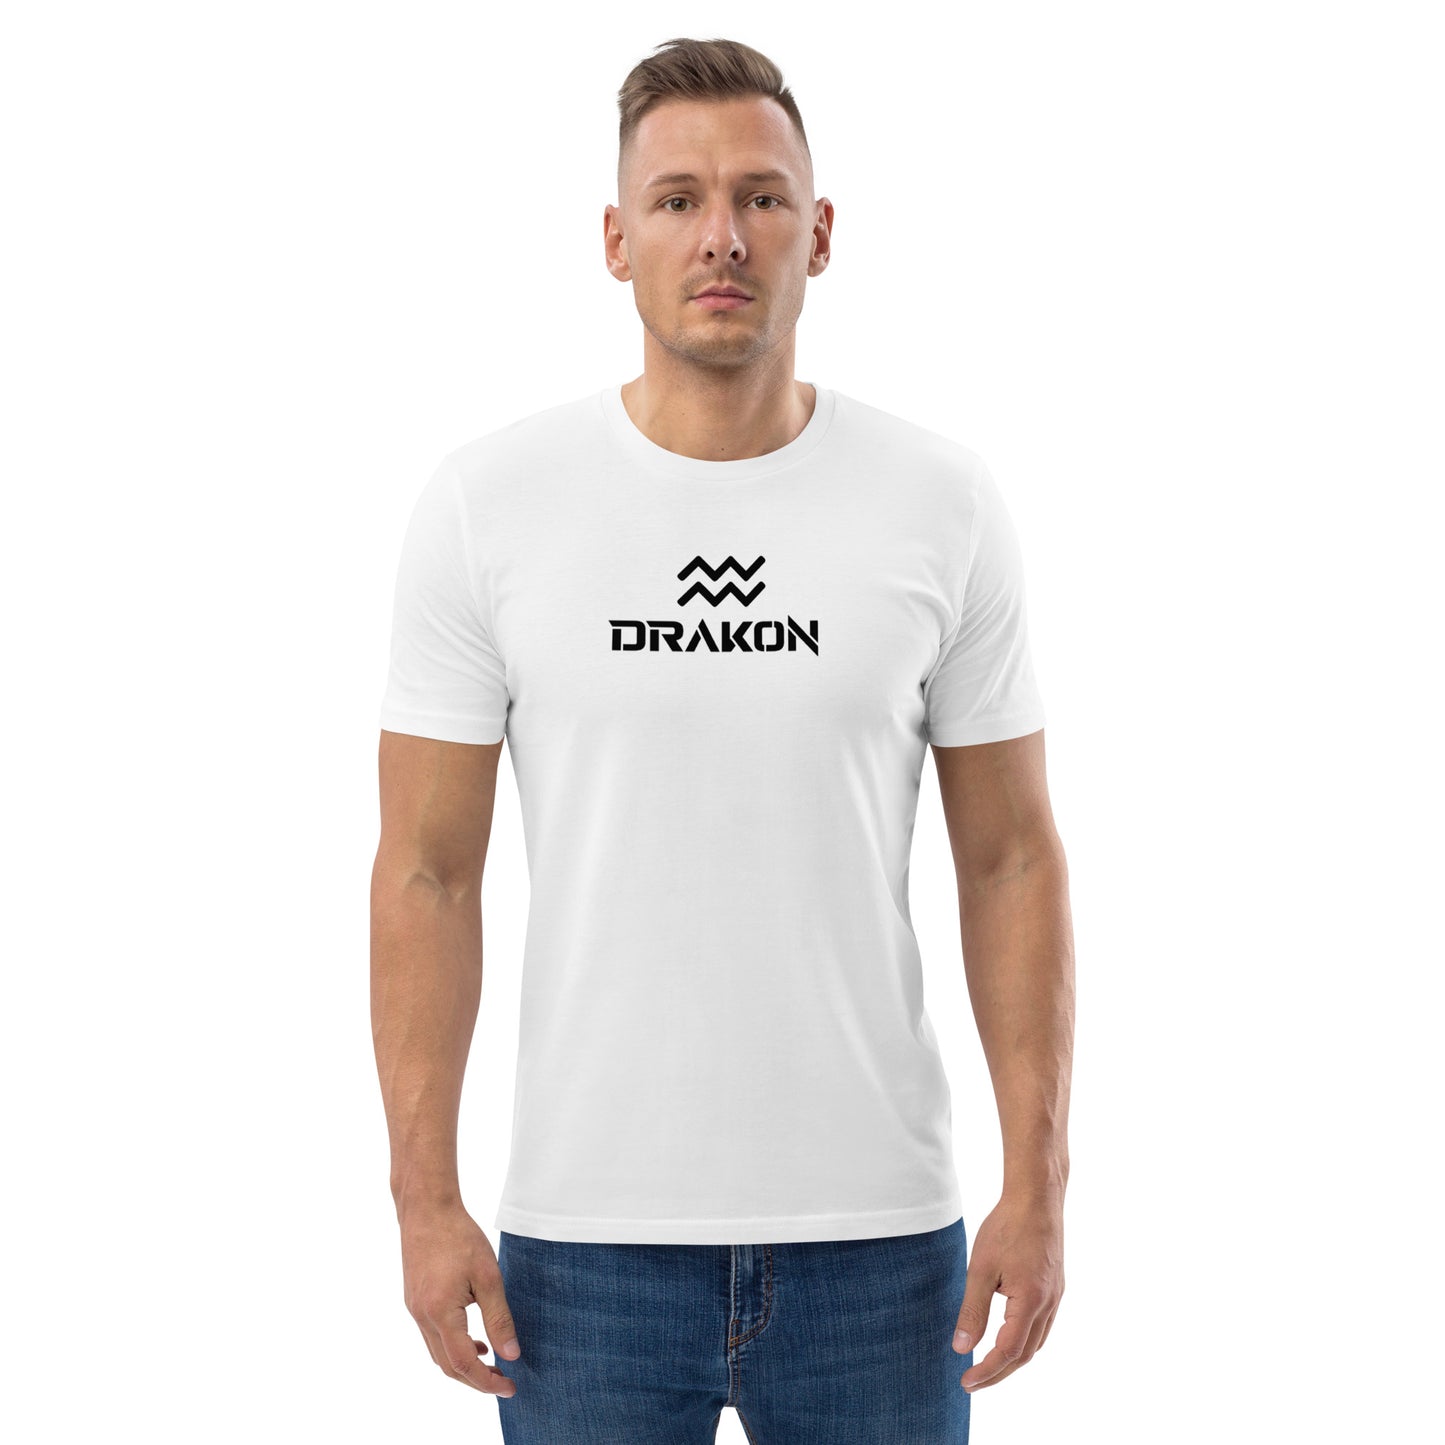 Drakon Aquarius Short Sleeve T-Shirt - White